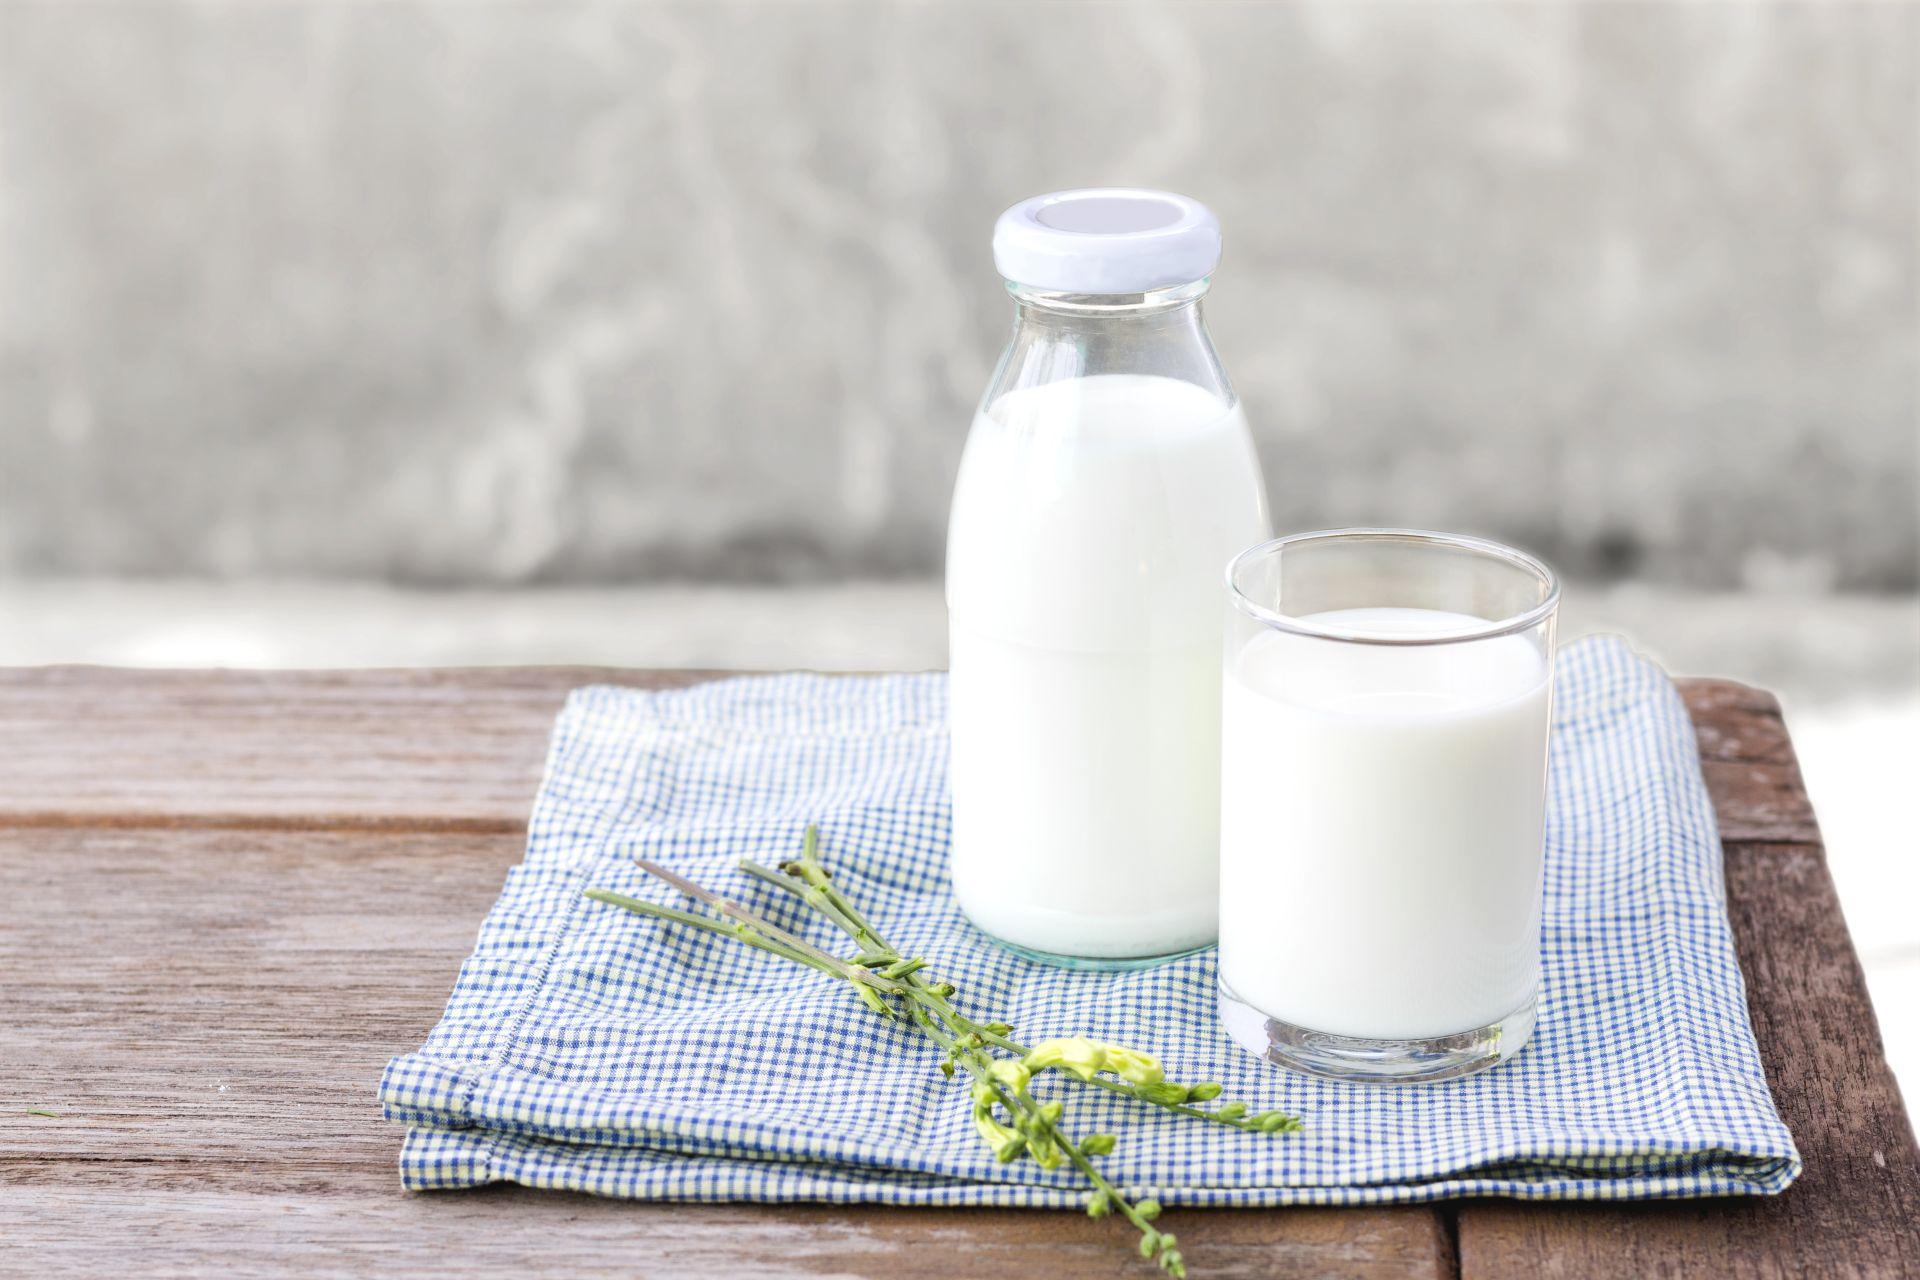 Geringeres KV-Risiko bei hohem Milchkonsum: die PURE-Studie